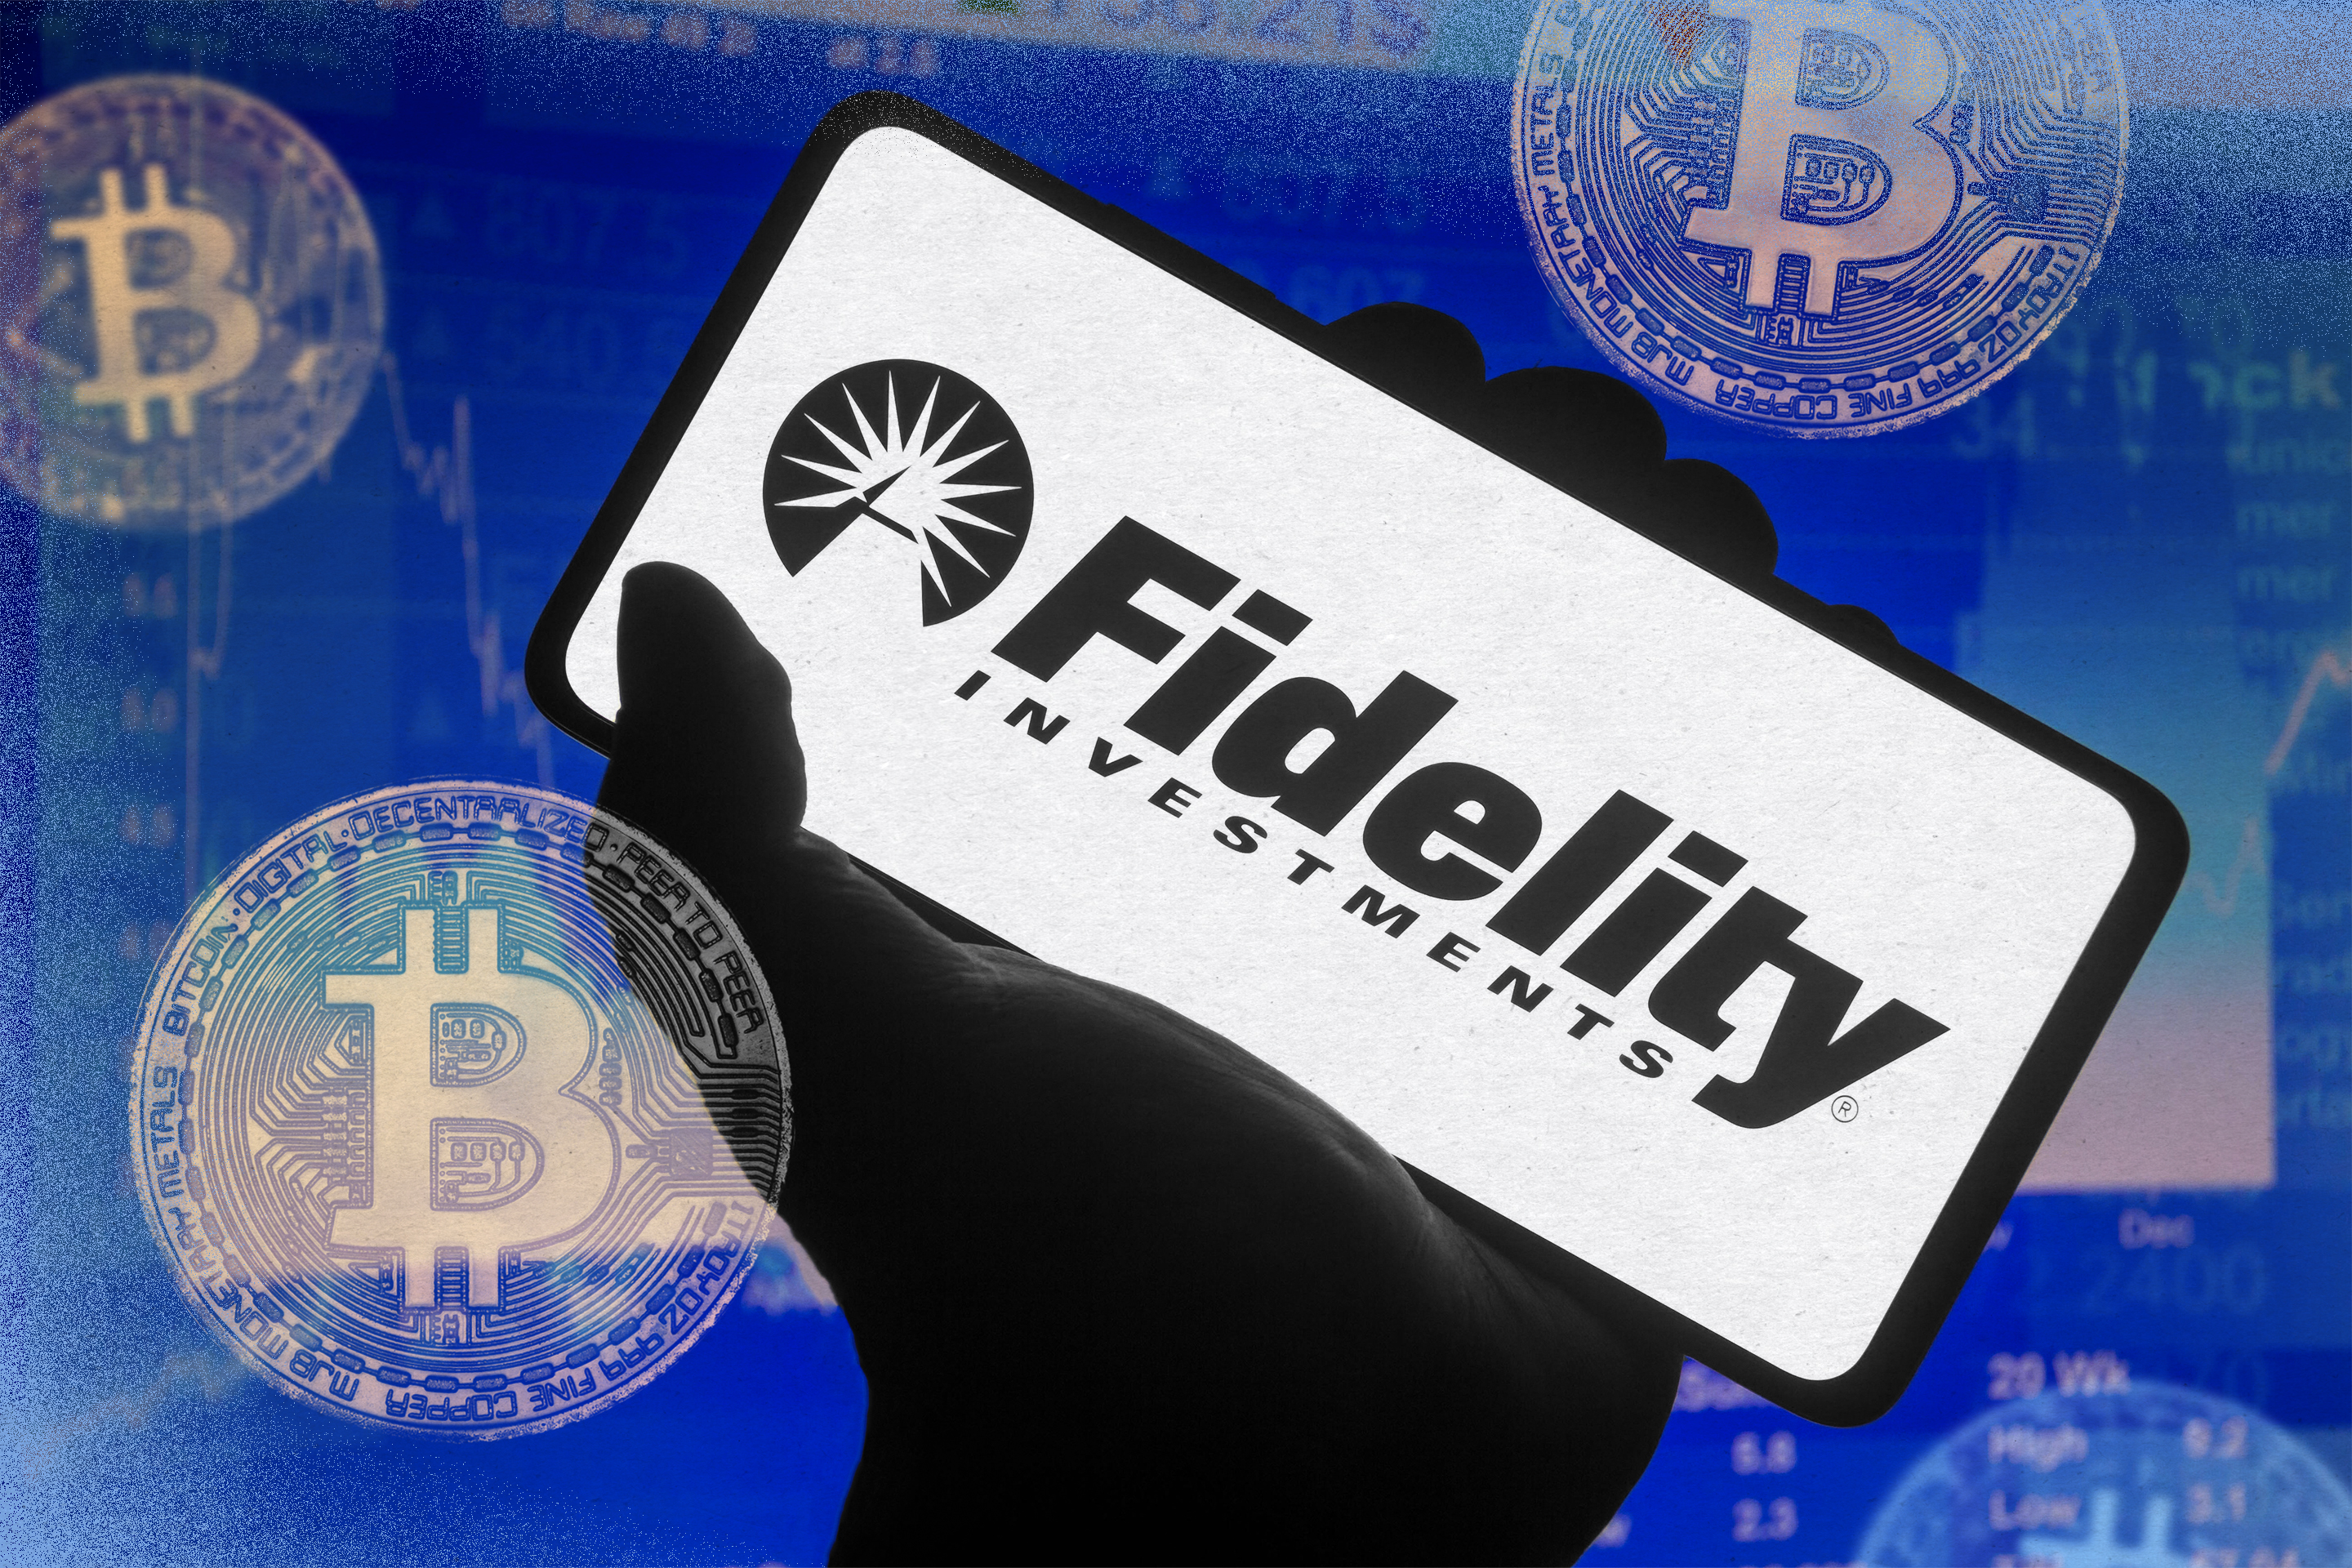 Fidelity Posts Record Revenue, Profit - WSJ